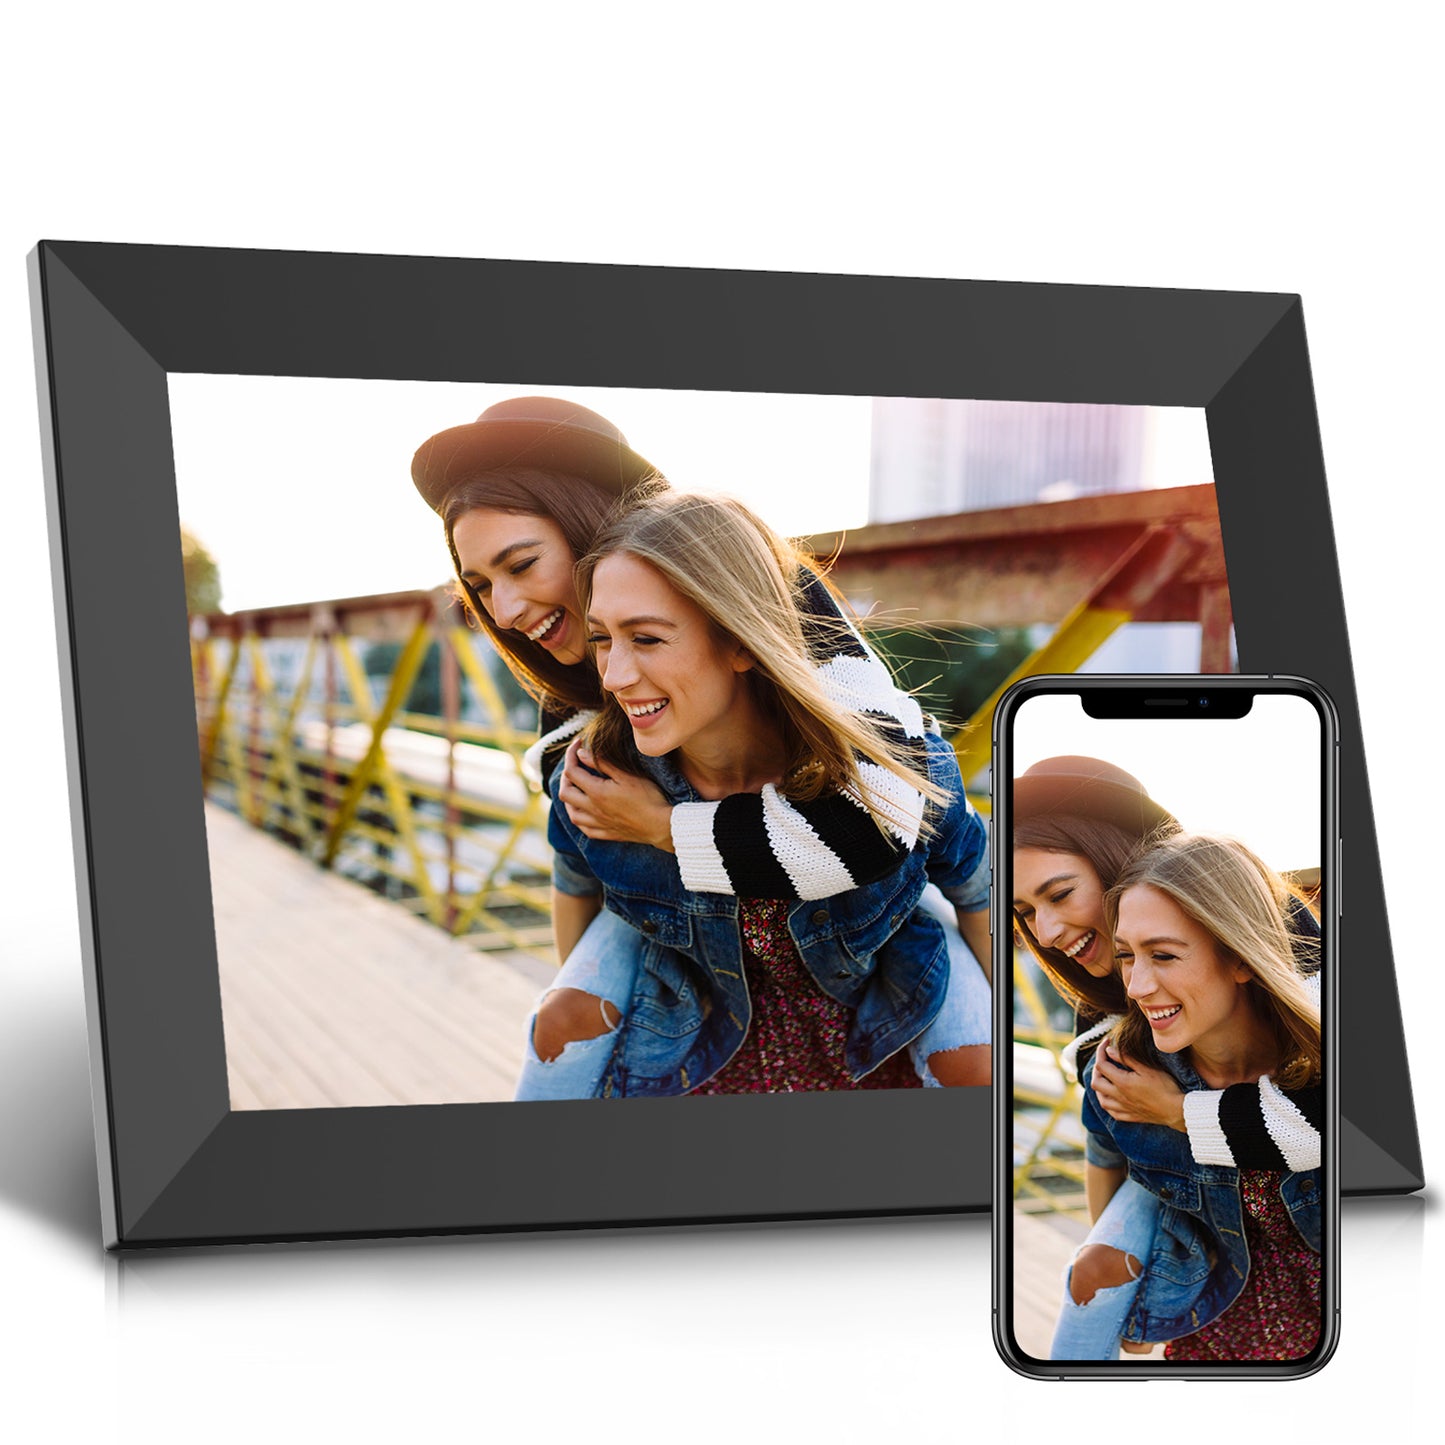 Jeemak Smart Digital Photo Frame 10" WiFi HD IPS Touch Screen Easy Setup to Share Video Clips & Photos Wall Mountable Auto-Rotate